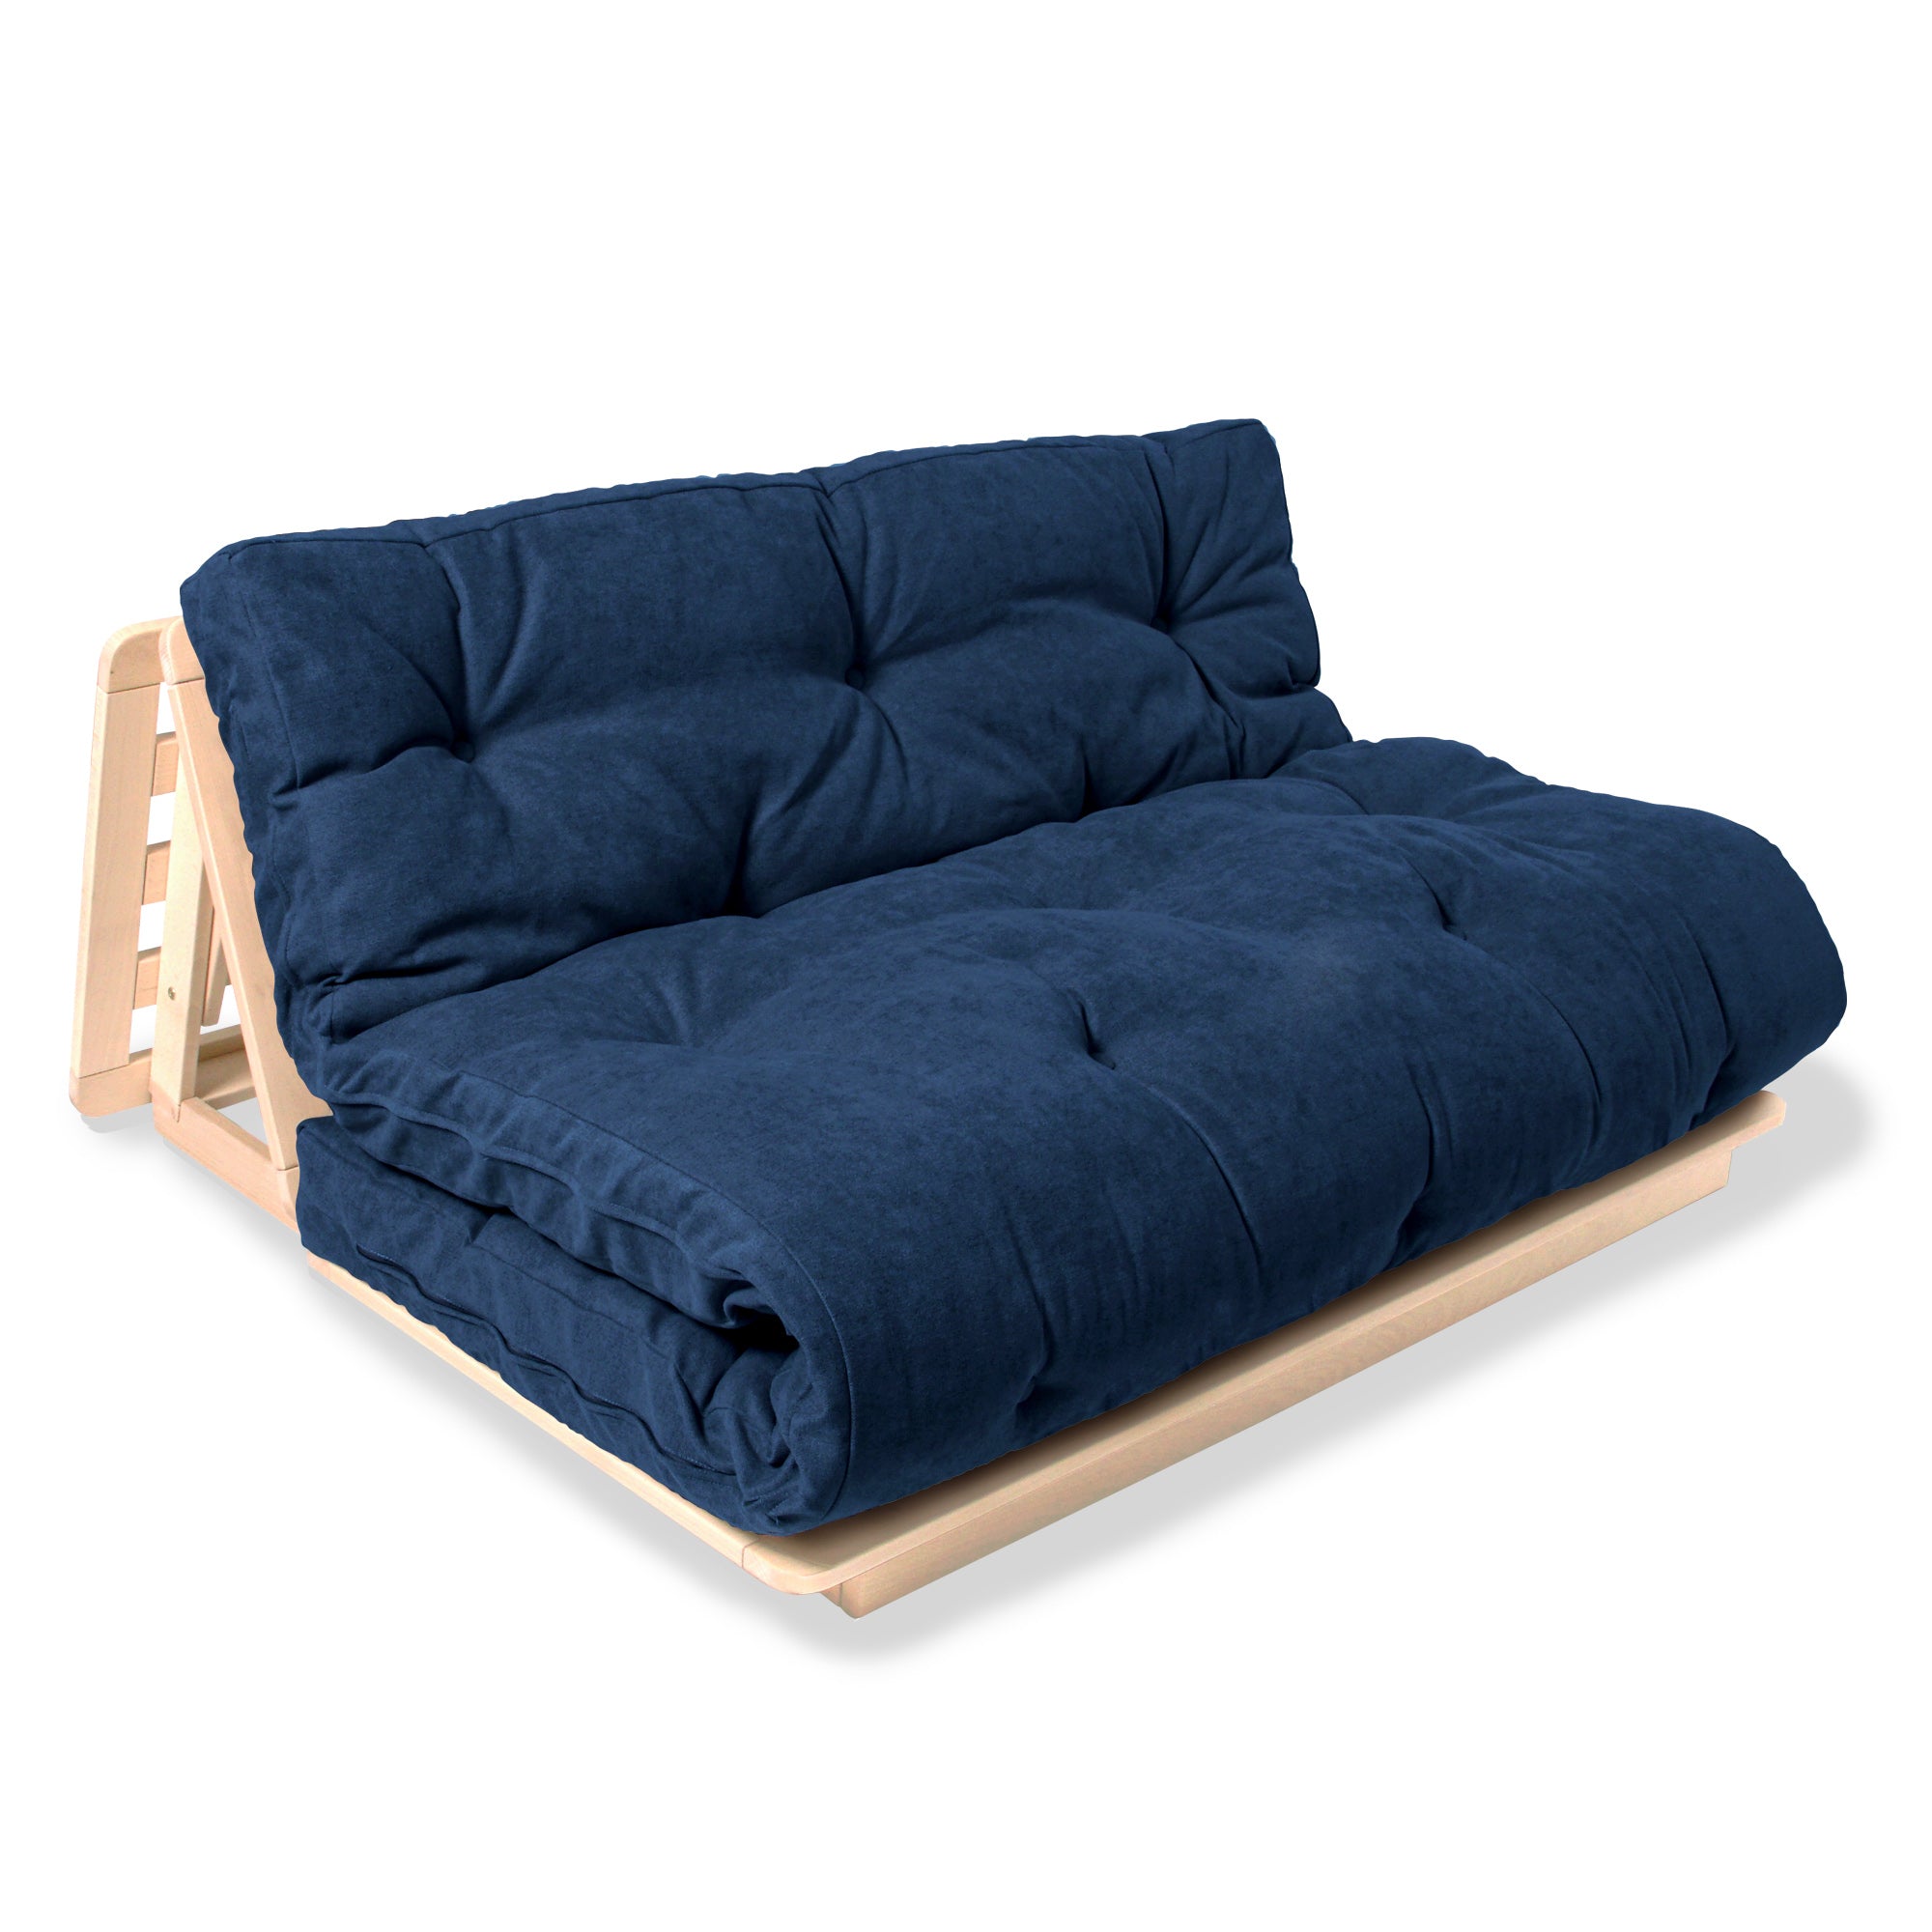 LAYTI-140 Futon Chair, Beech Wood, Natural Colour-blue fabric